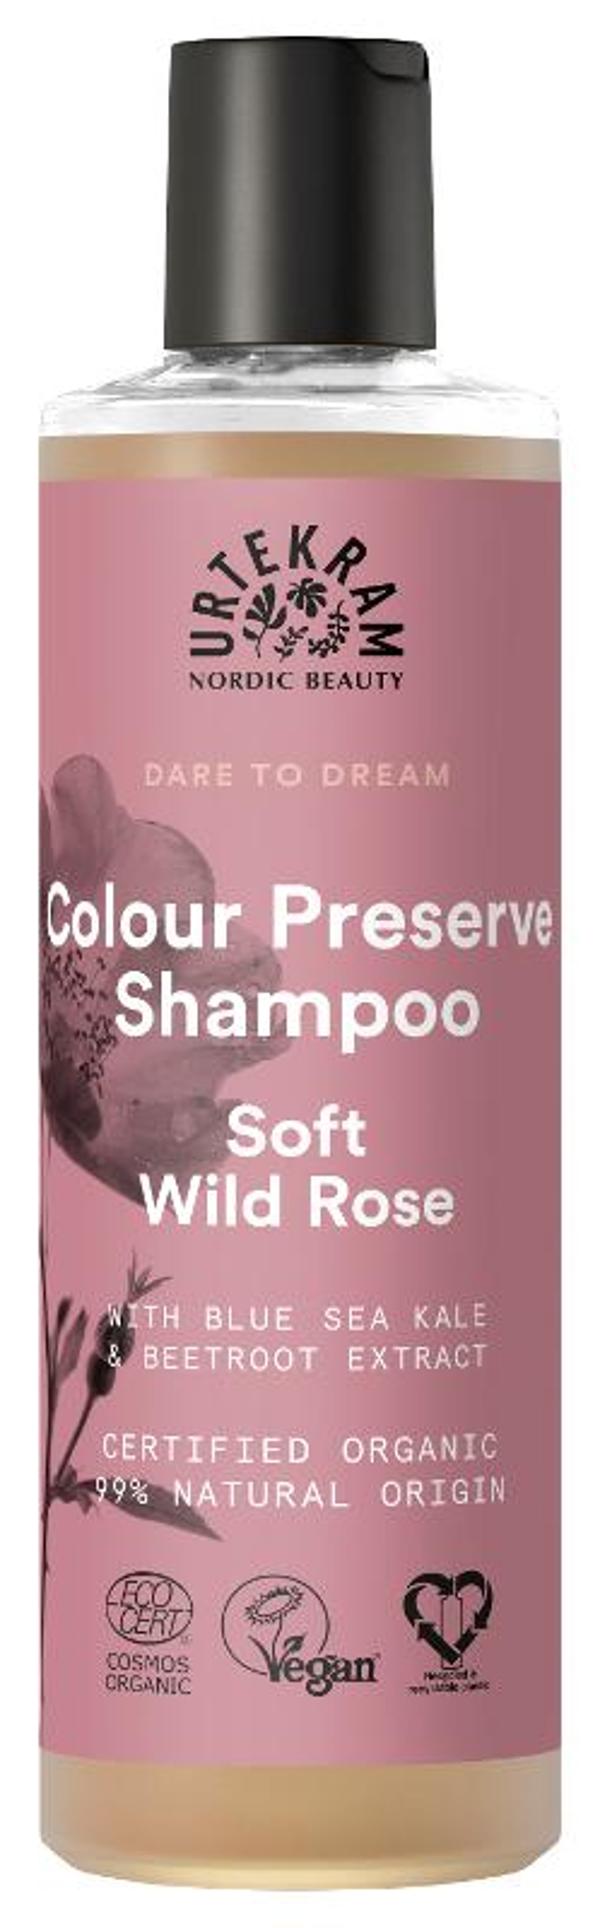 Produktfoto zu Urtekram Shampoo Soft Wild Rose 250ml